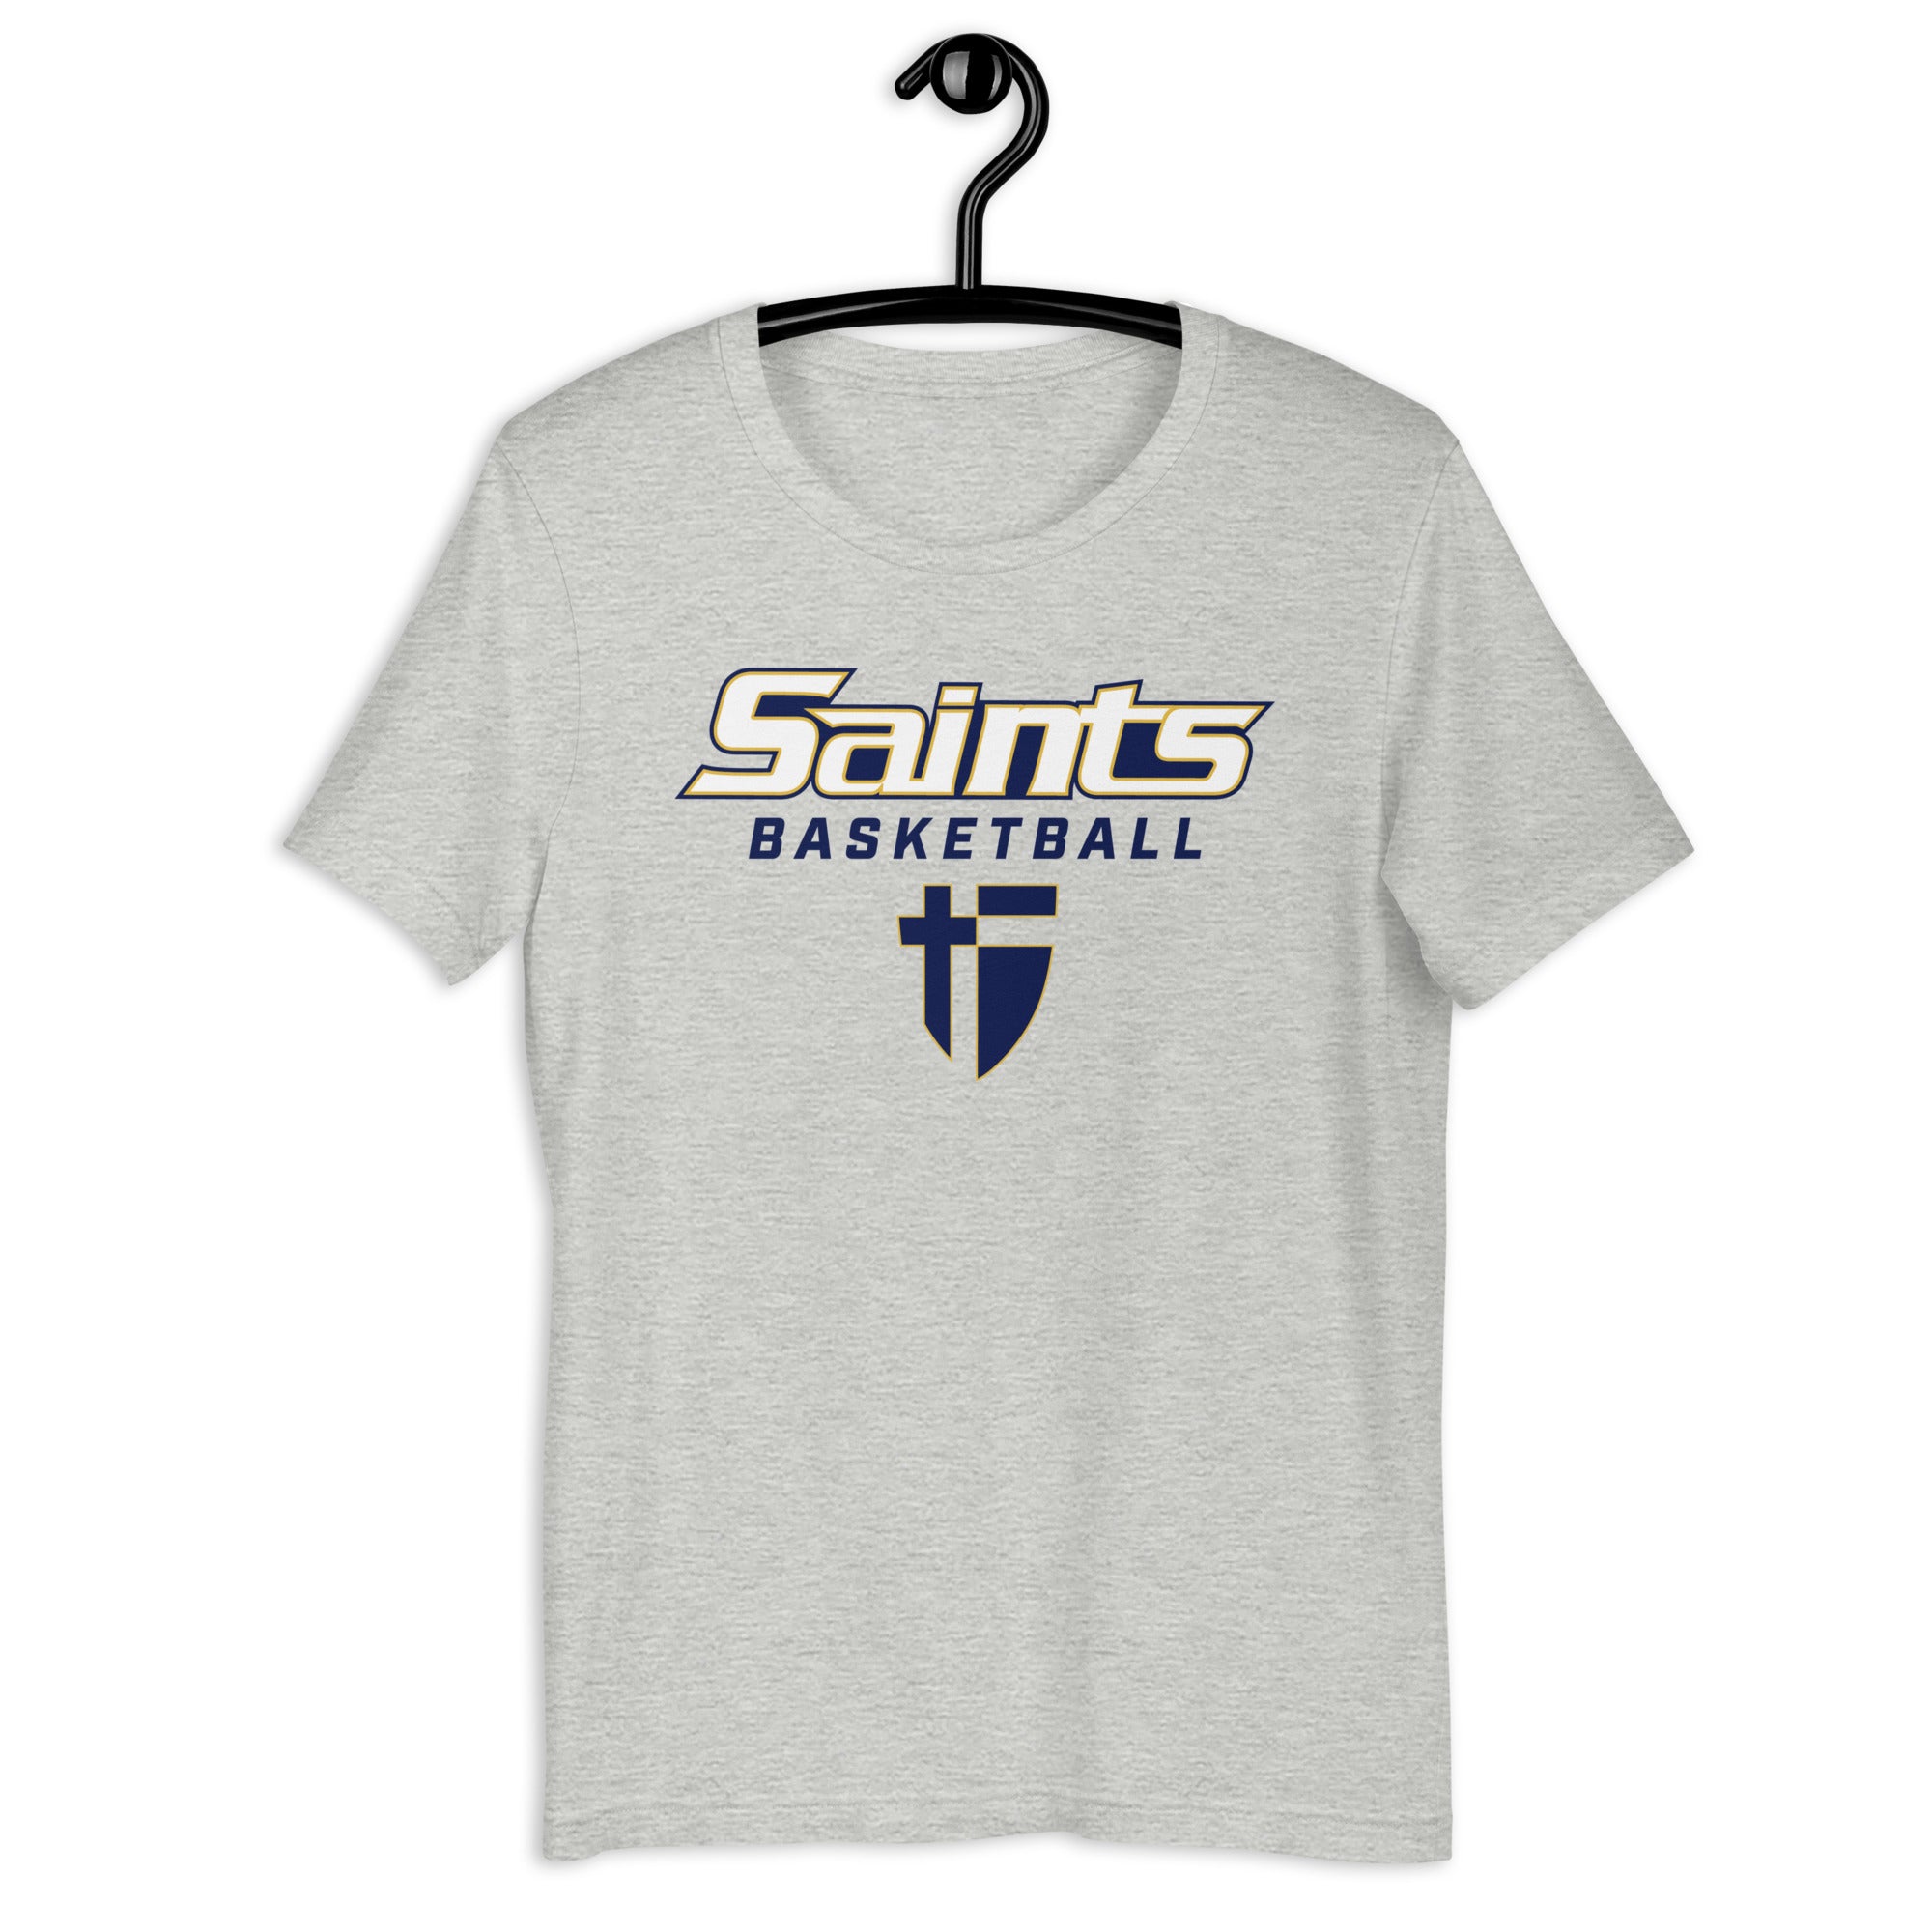 Saints Basketball Unisex t-shirt